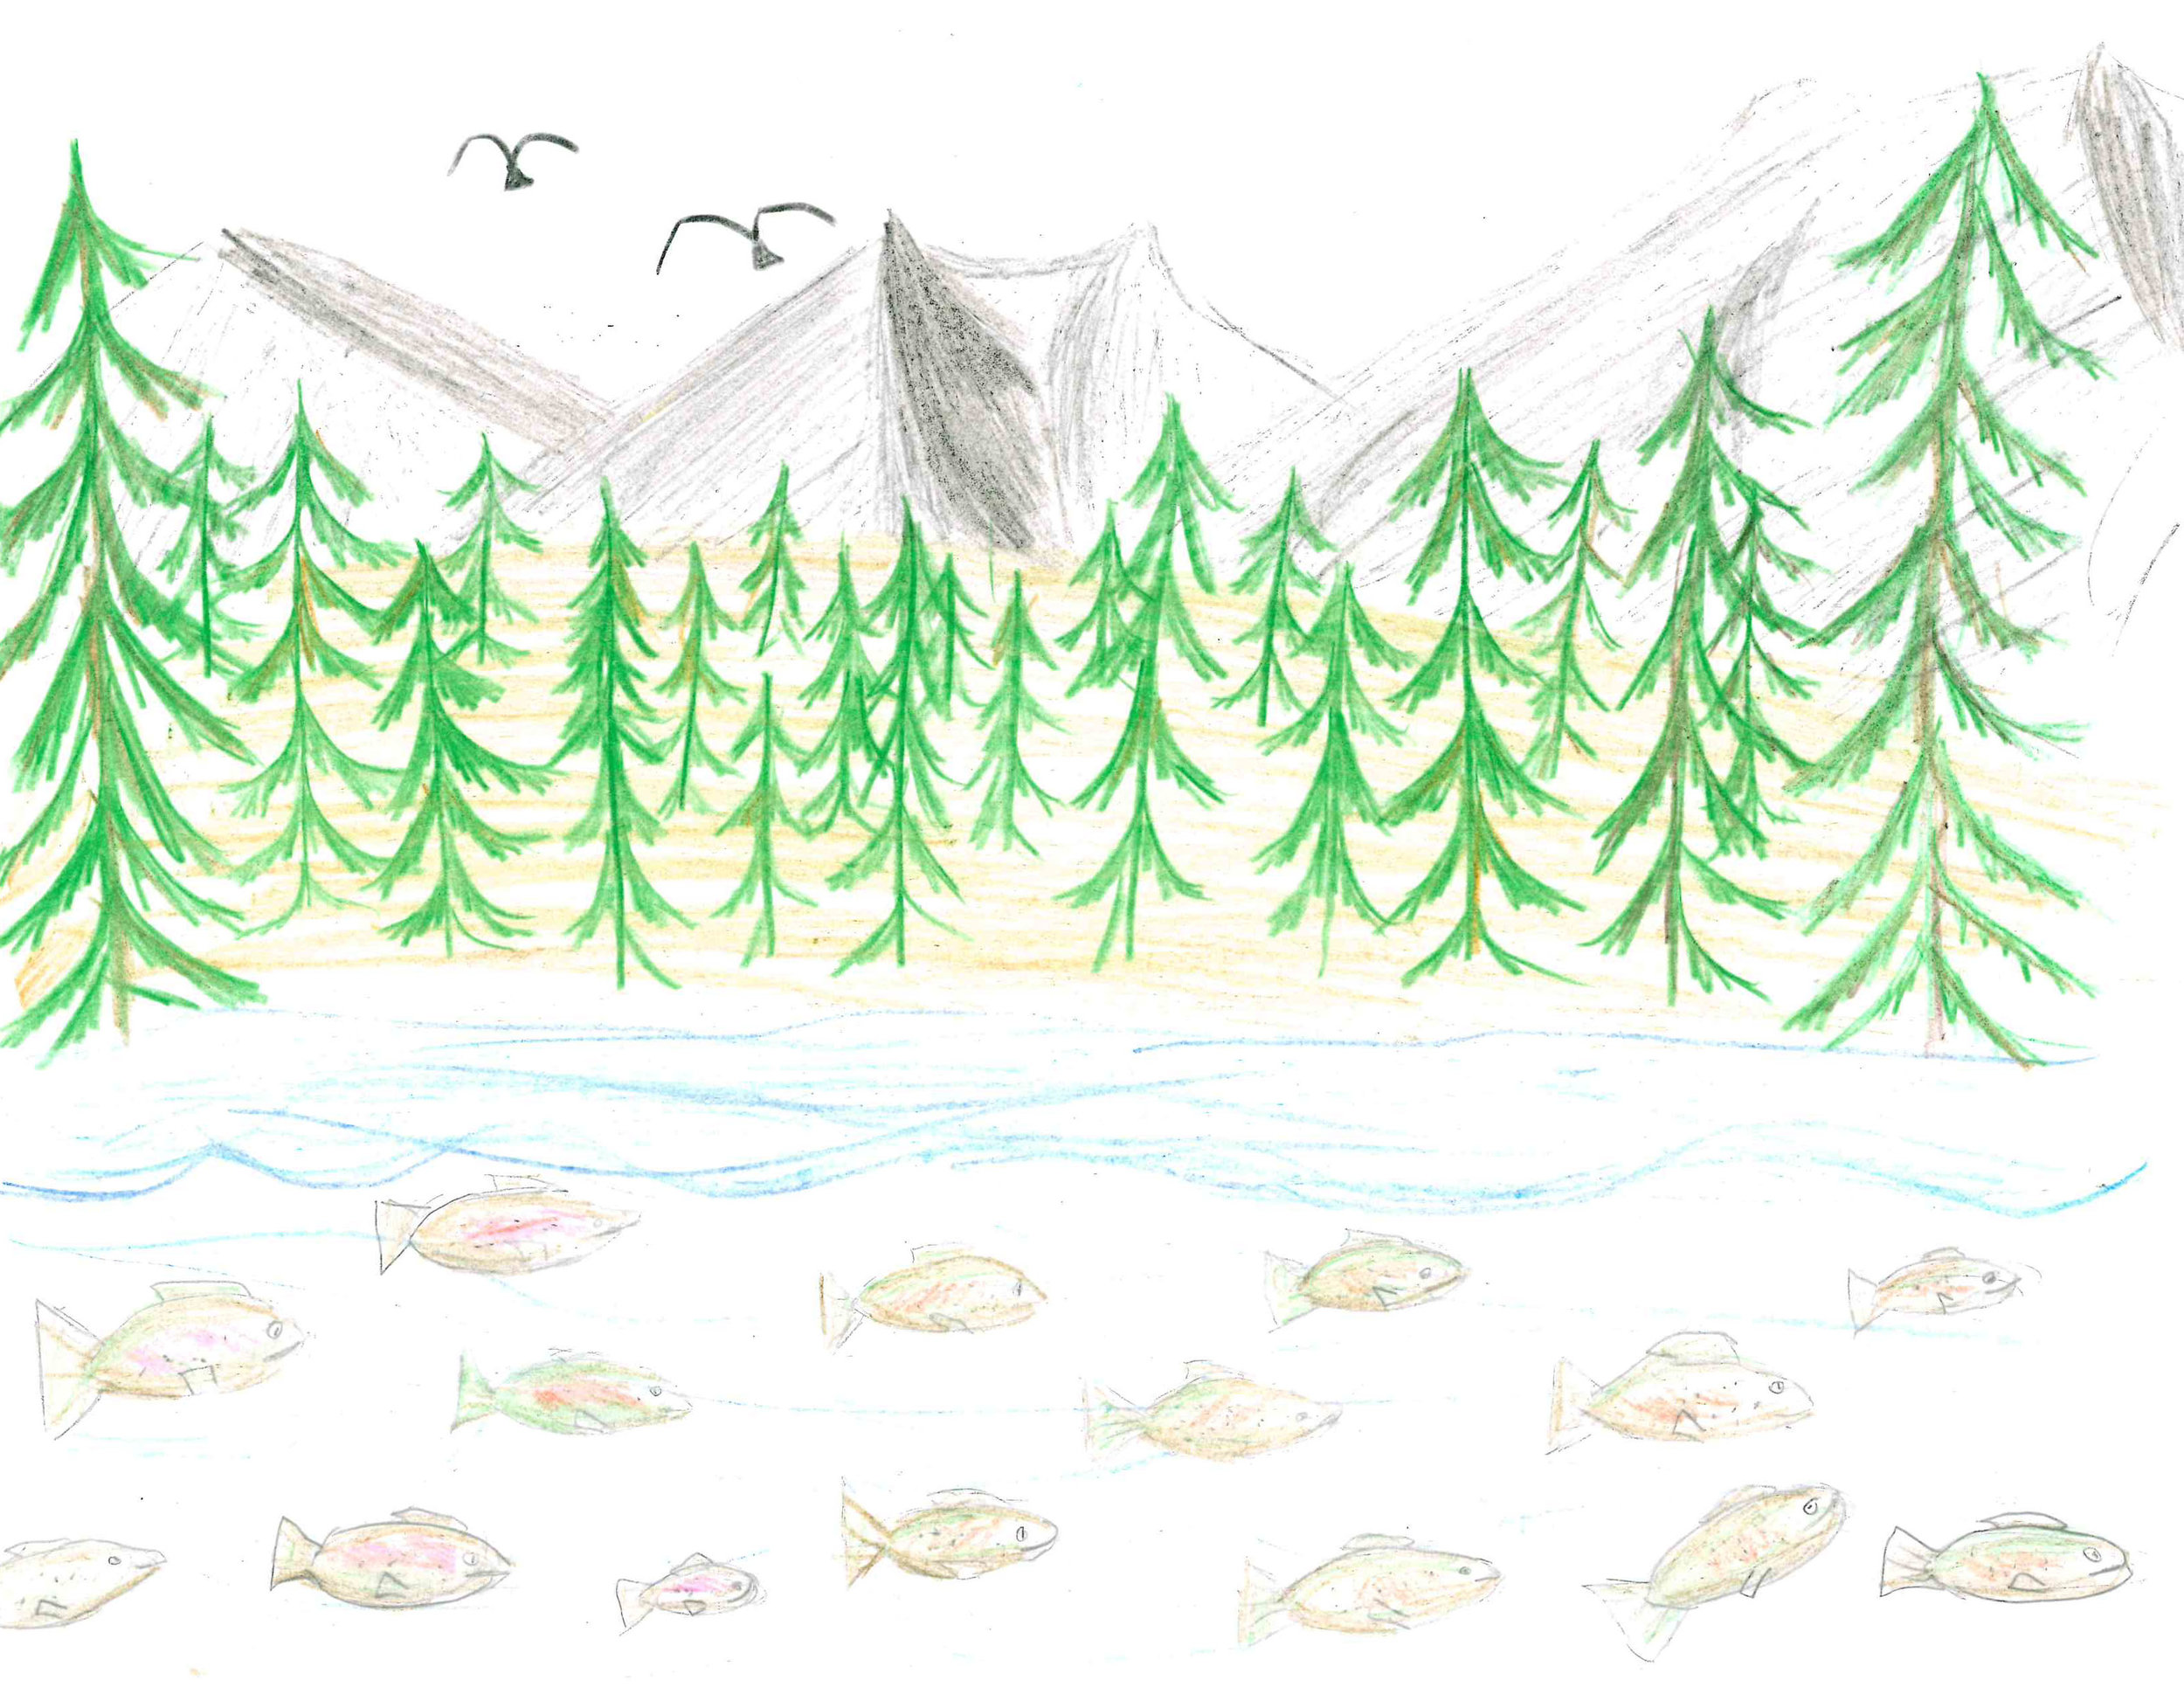 Salmon Upstream by Sofia Scicchitano - 2nd Place - Grades 6-8